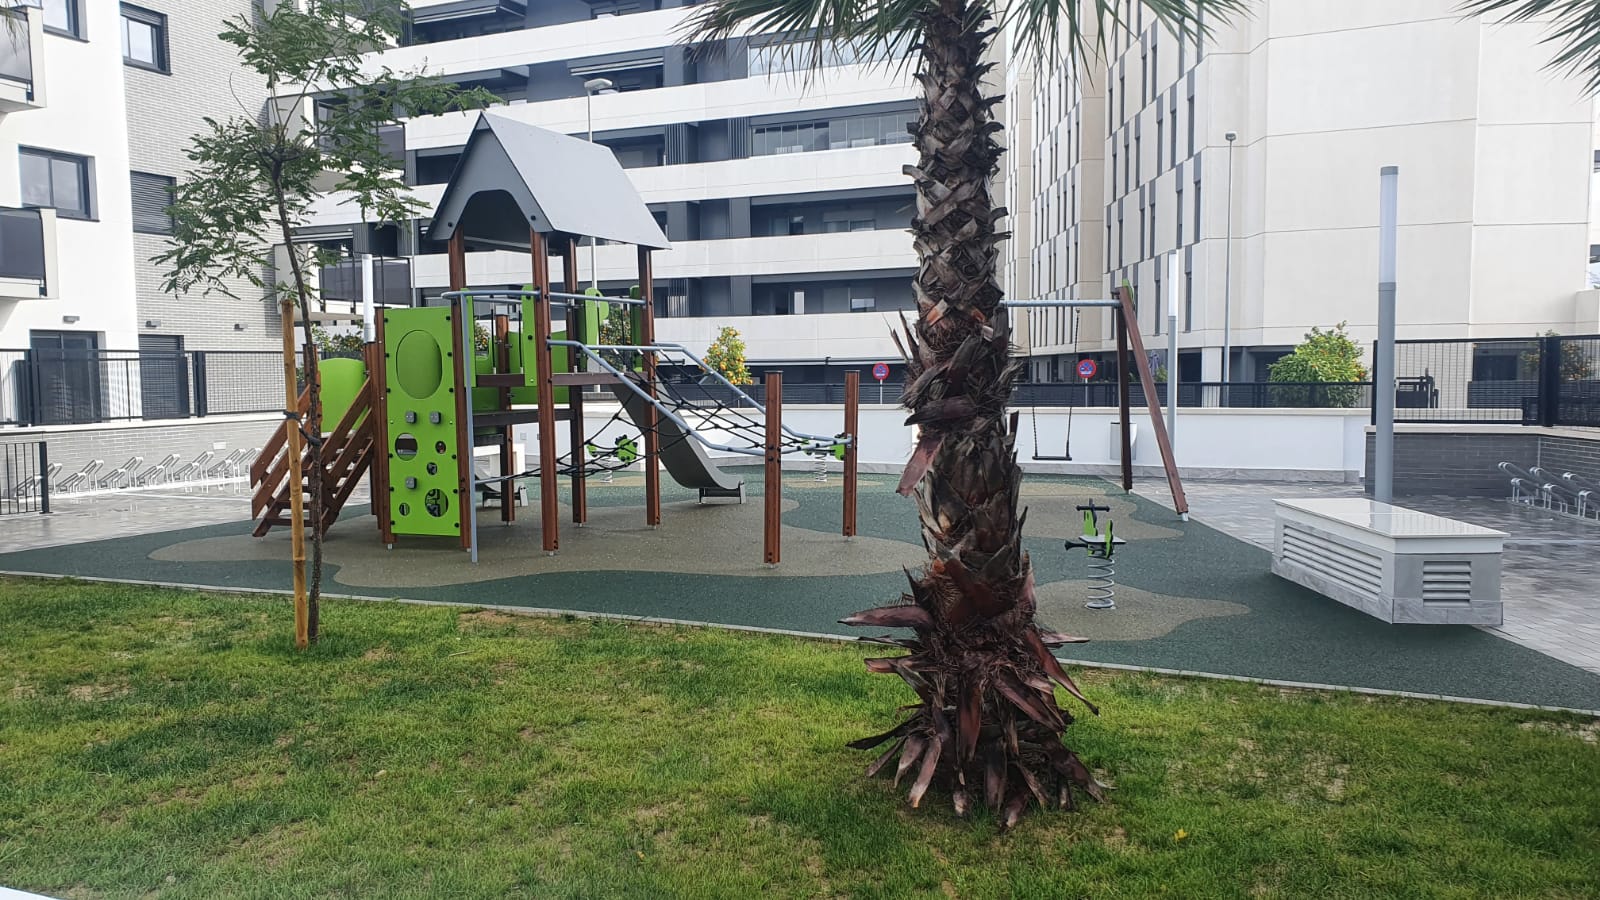 Playground in Spain, Cordoba